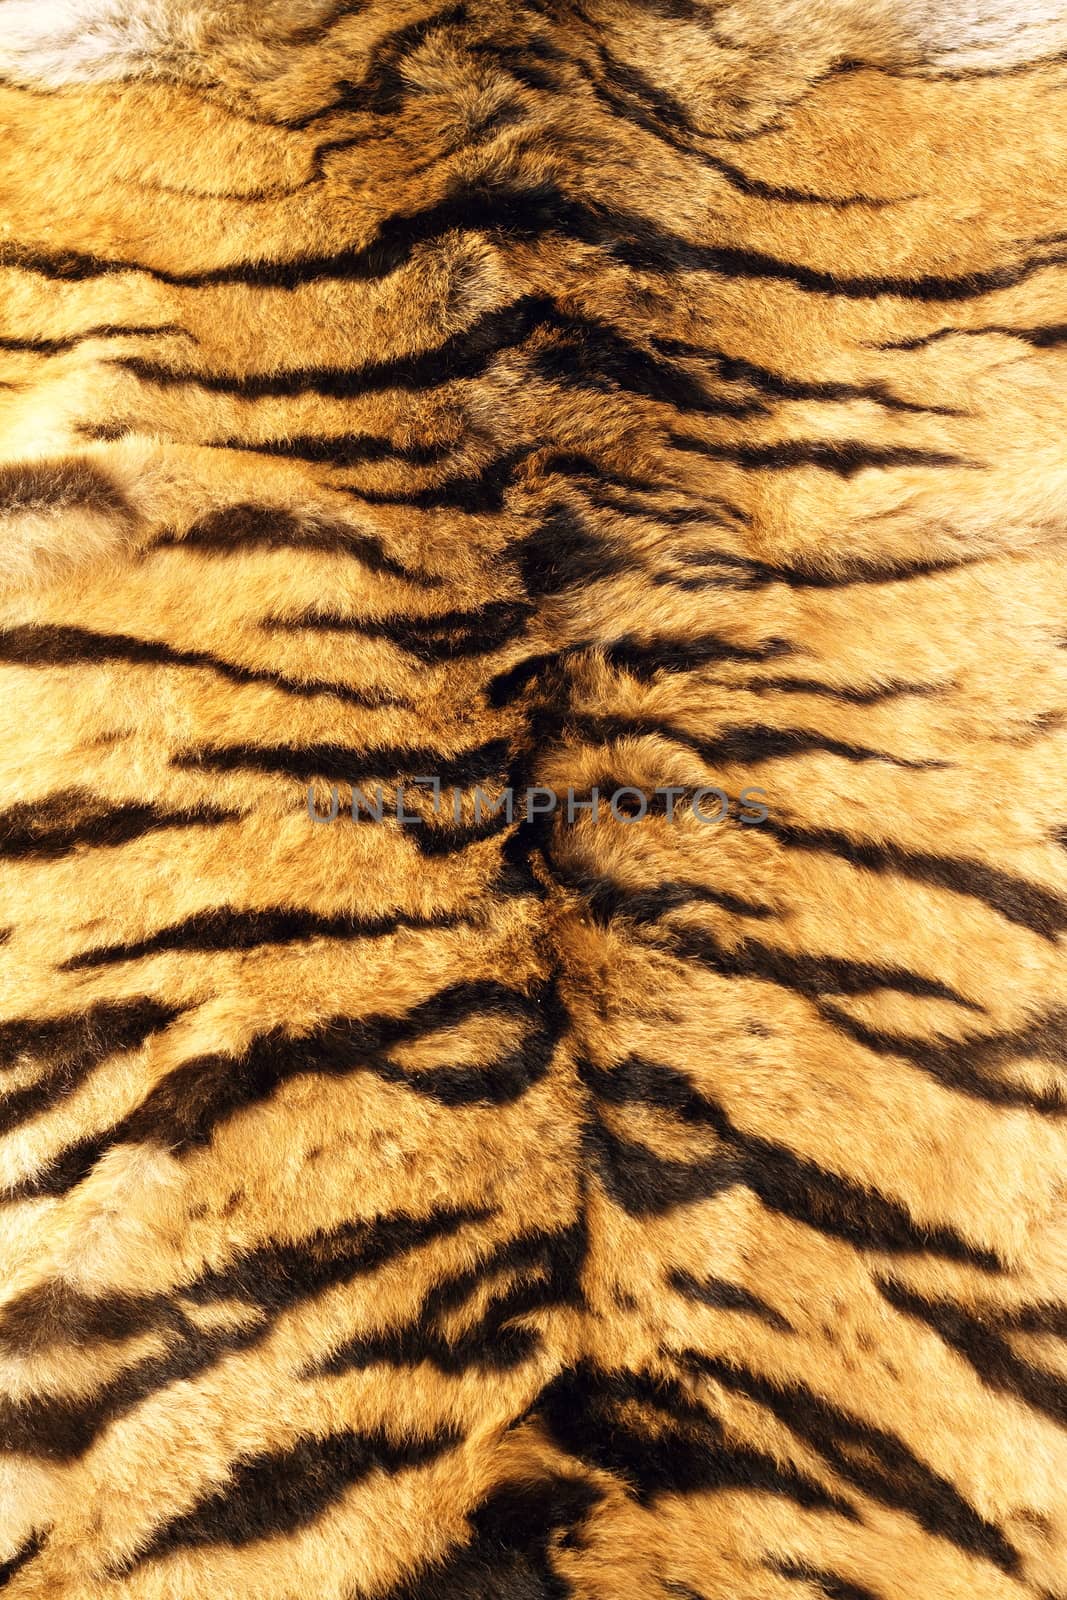 stripes on tiger pelt by taviphoto